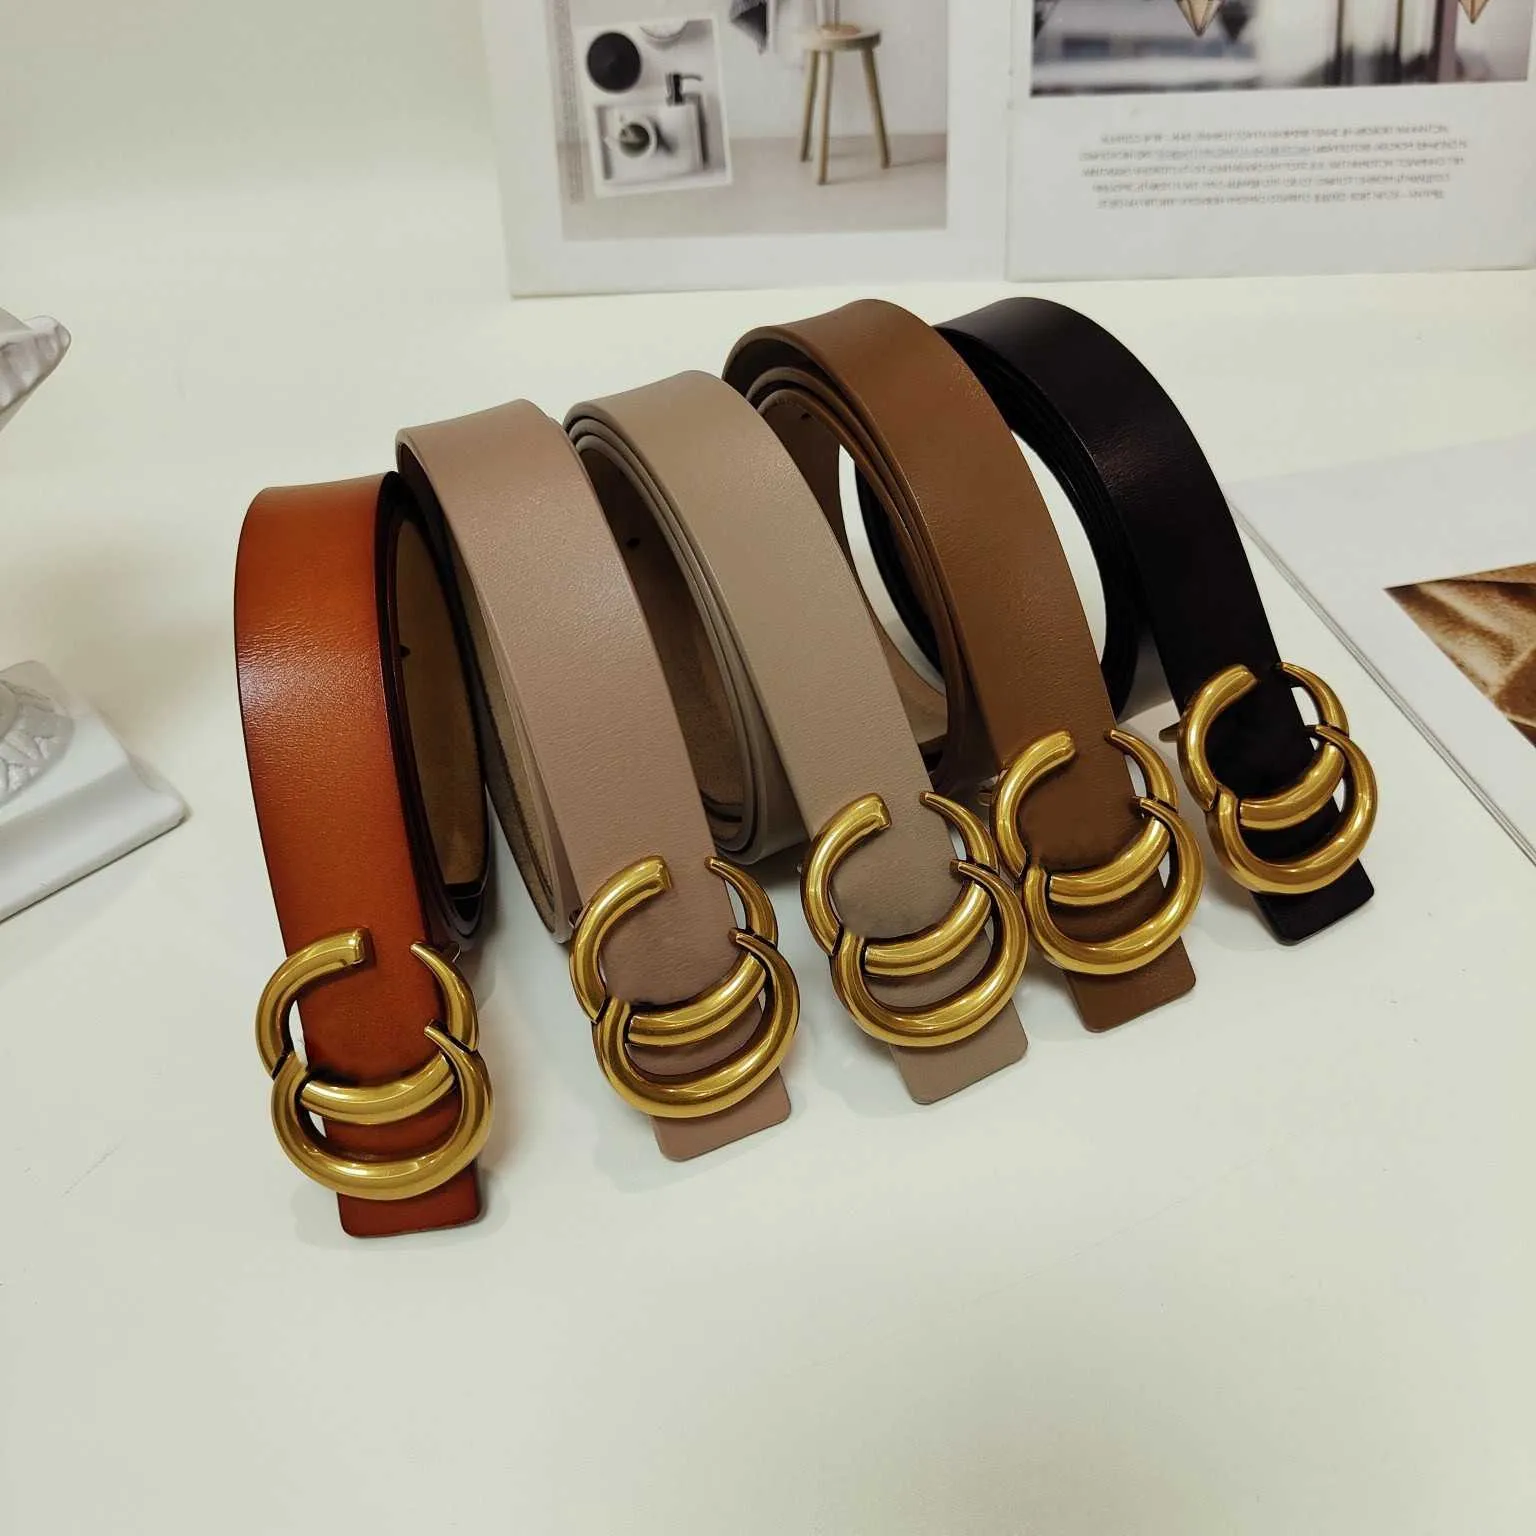 men designers belts womens belts mens belts high quality Fashion casual leather belt belt for man woman beltcinturones de